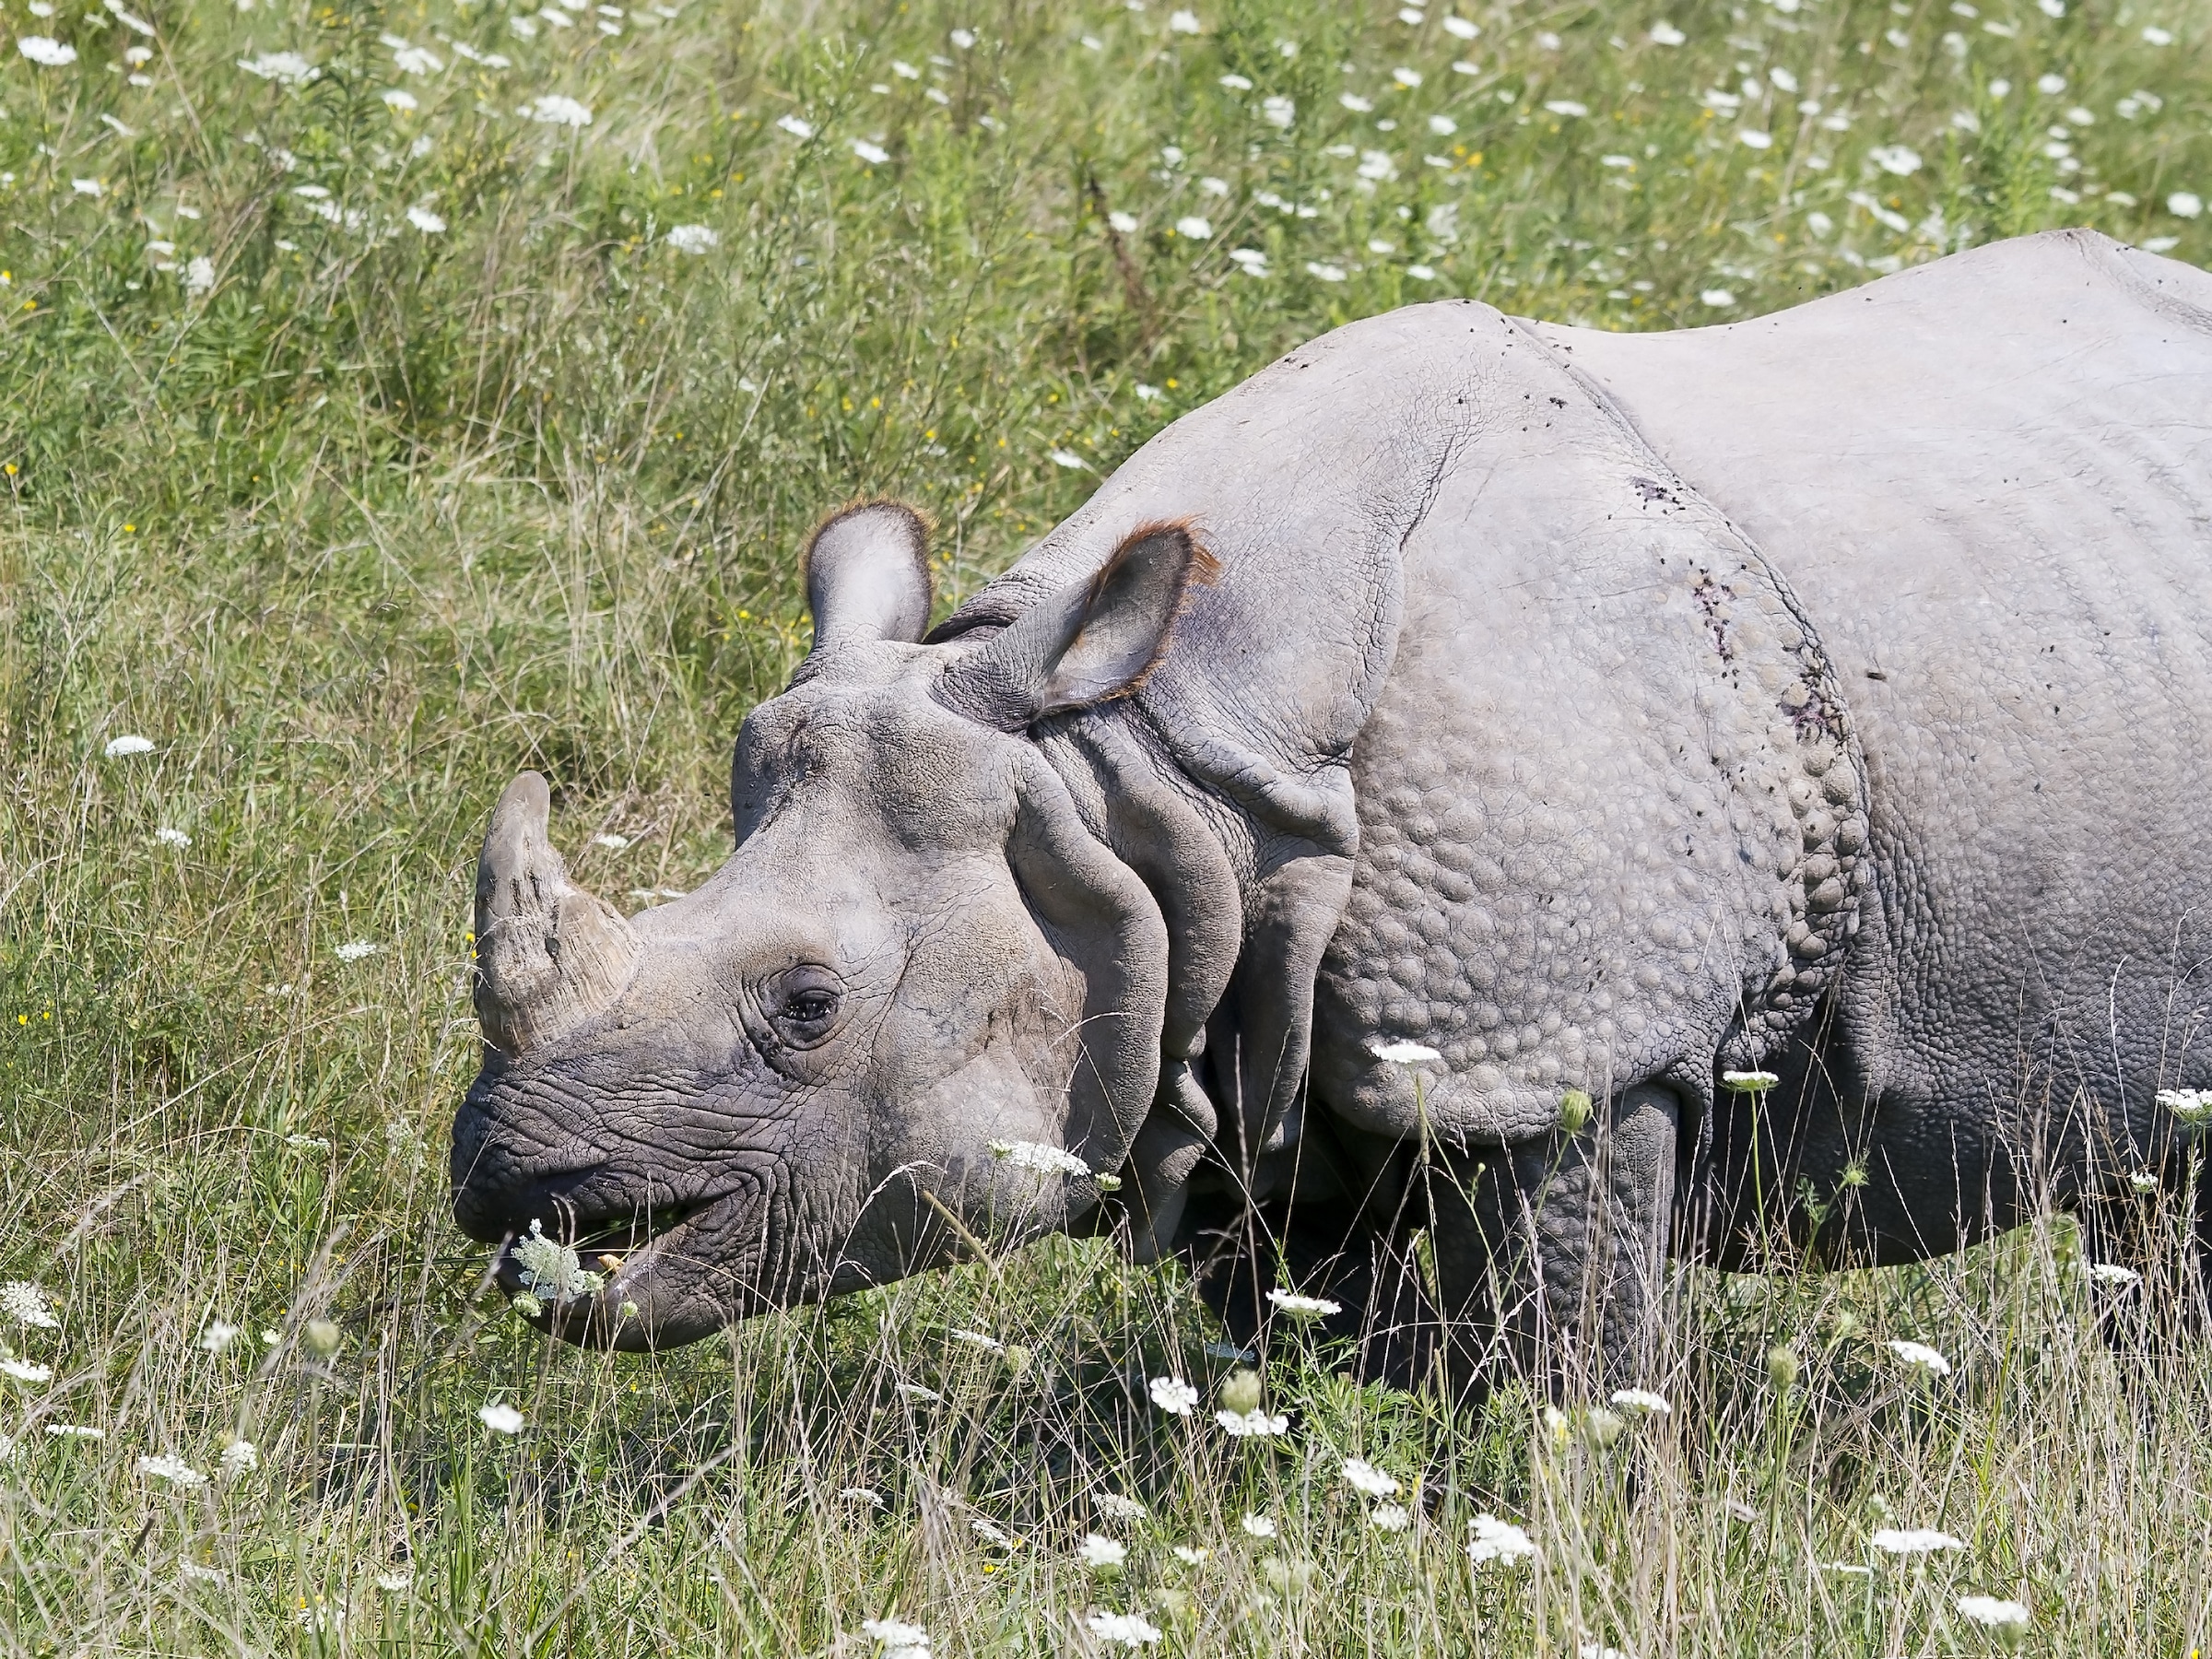 Greater one-horned rhino grazing